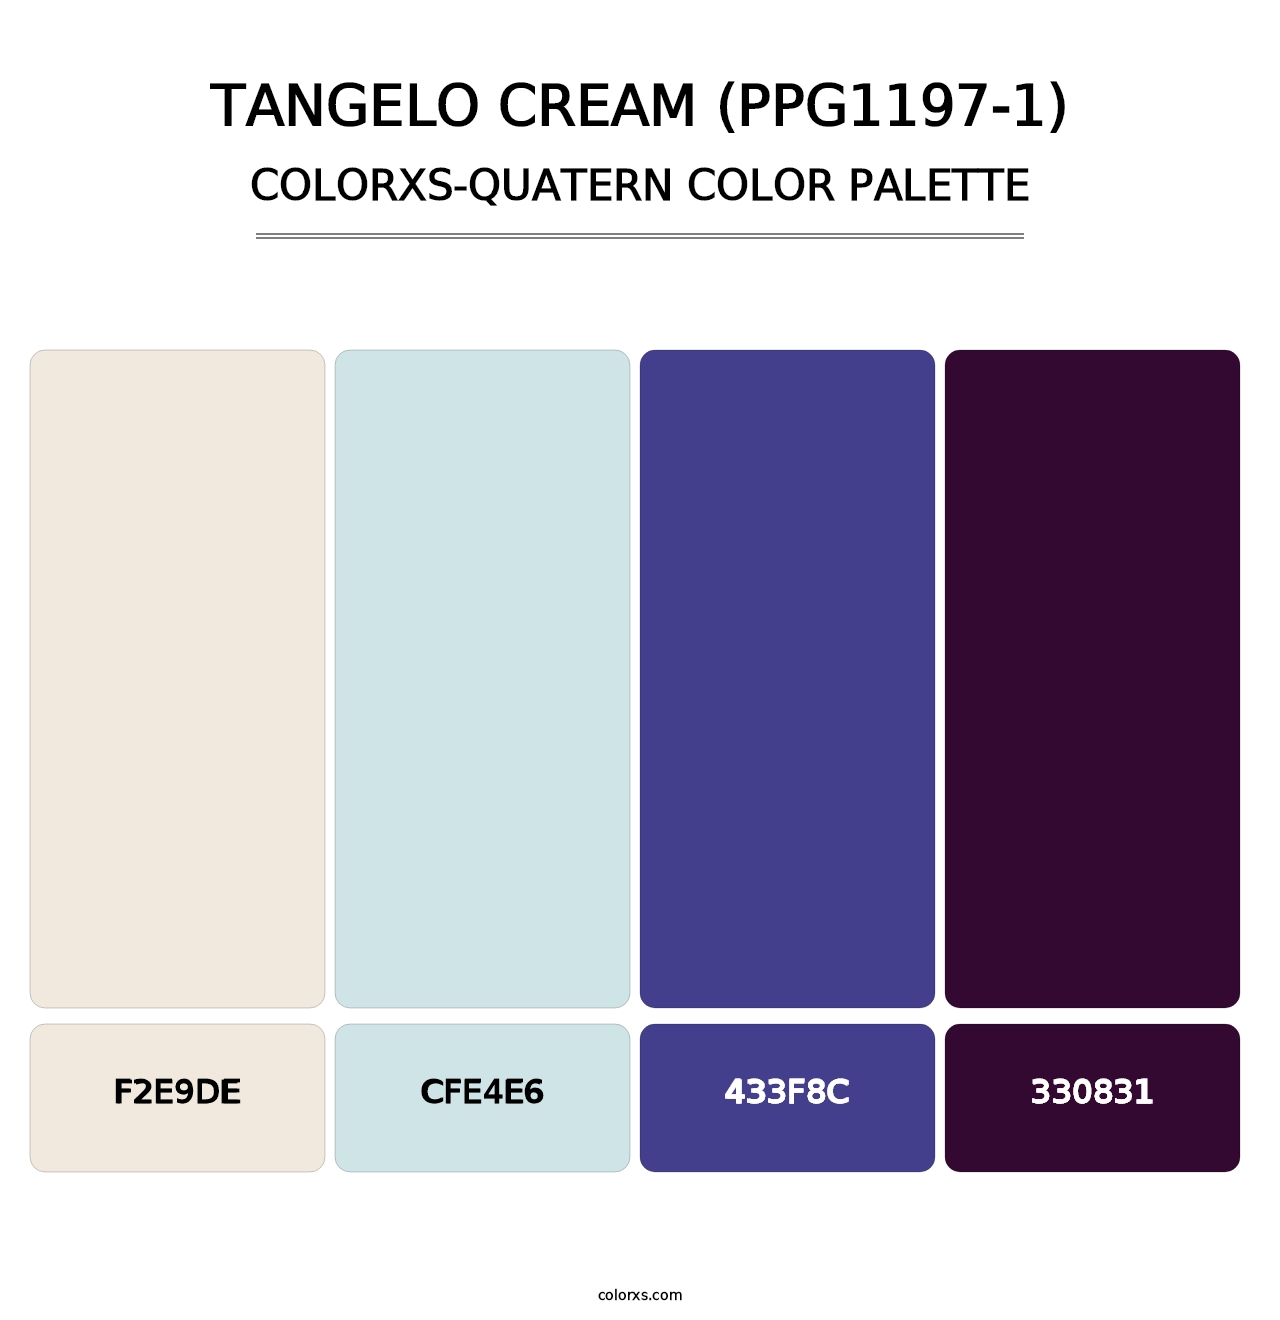 Tangelo Cream (PPG1197-1) - Colorxs Quatern Palette